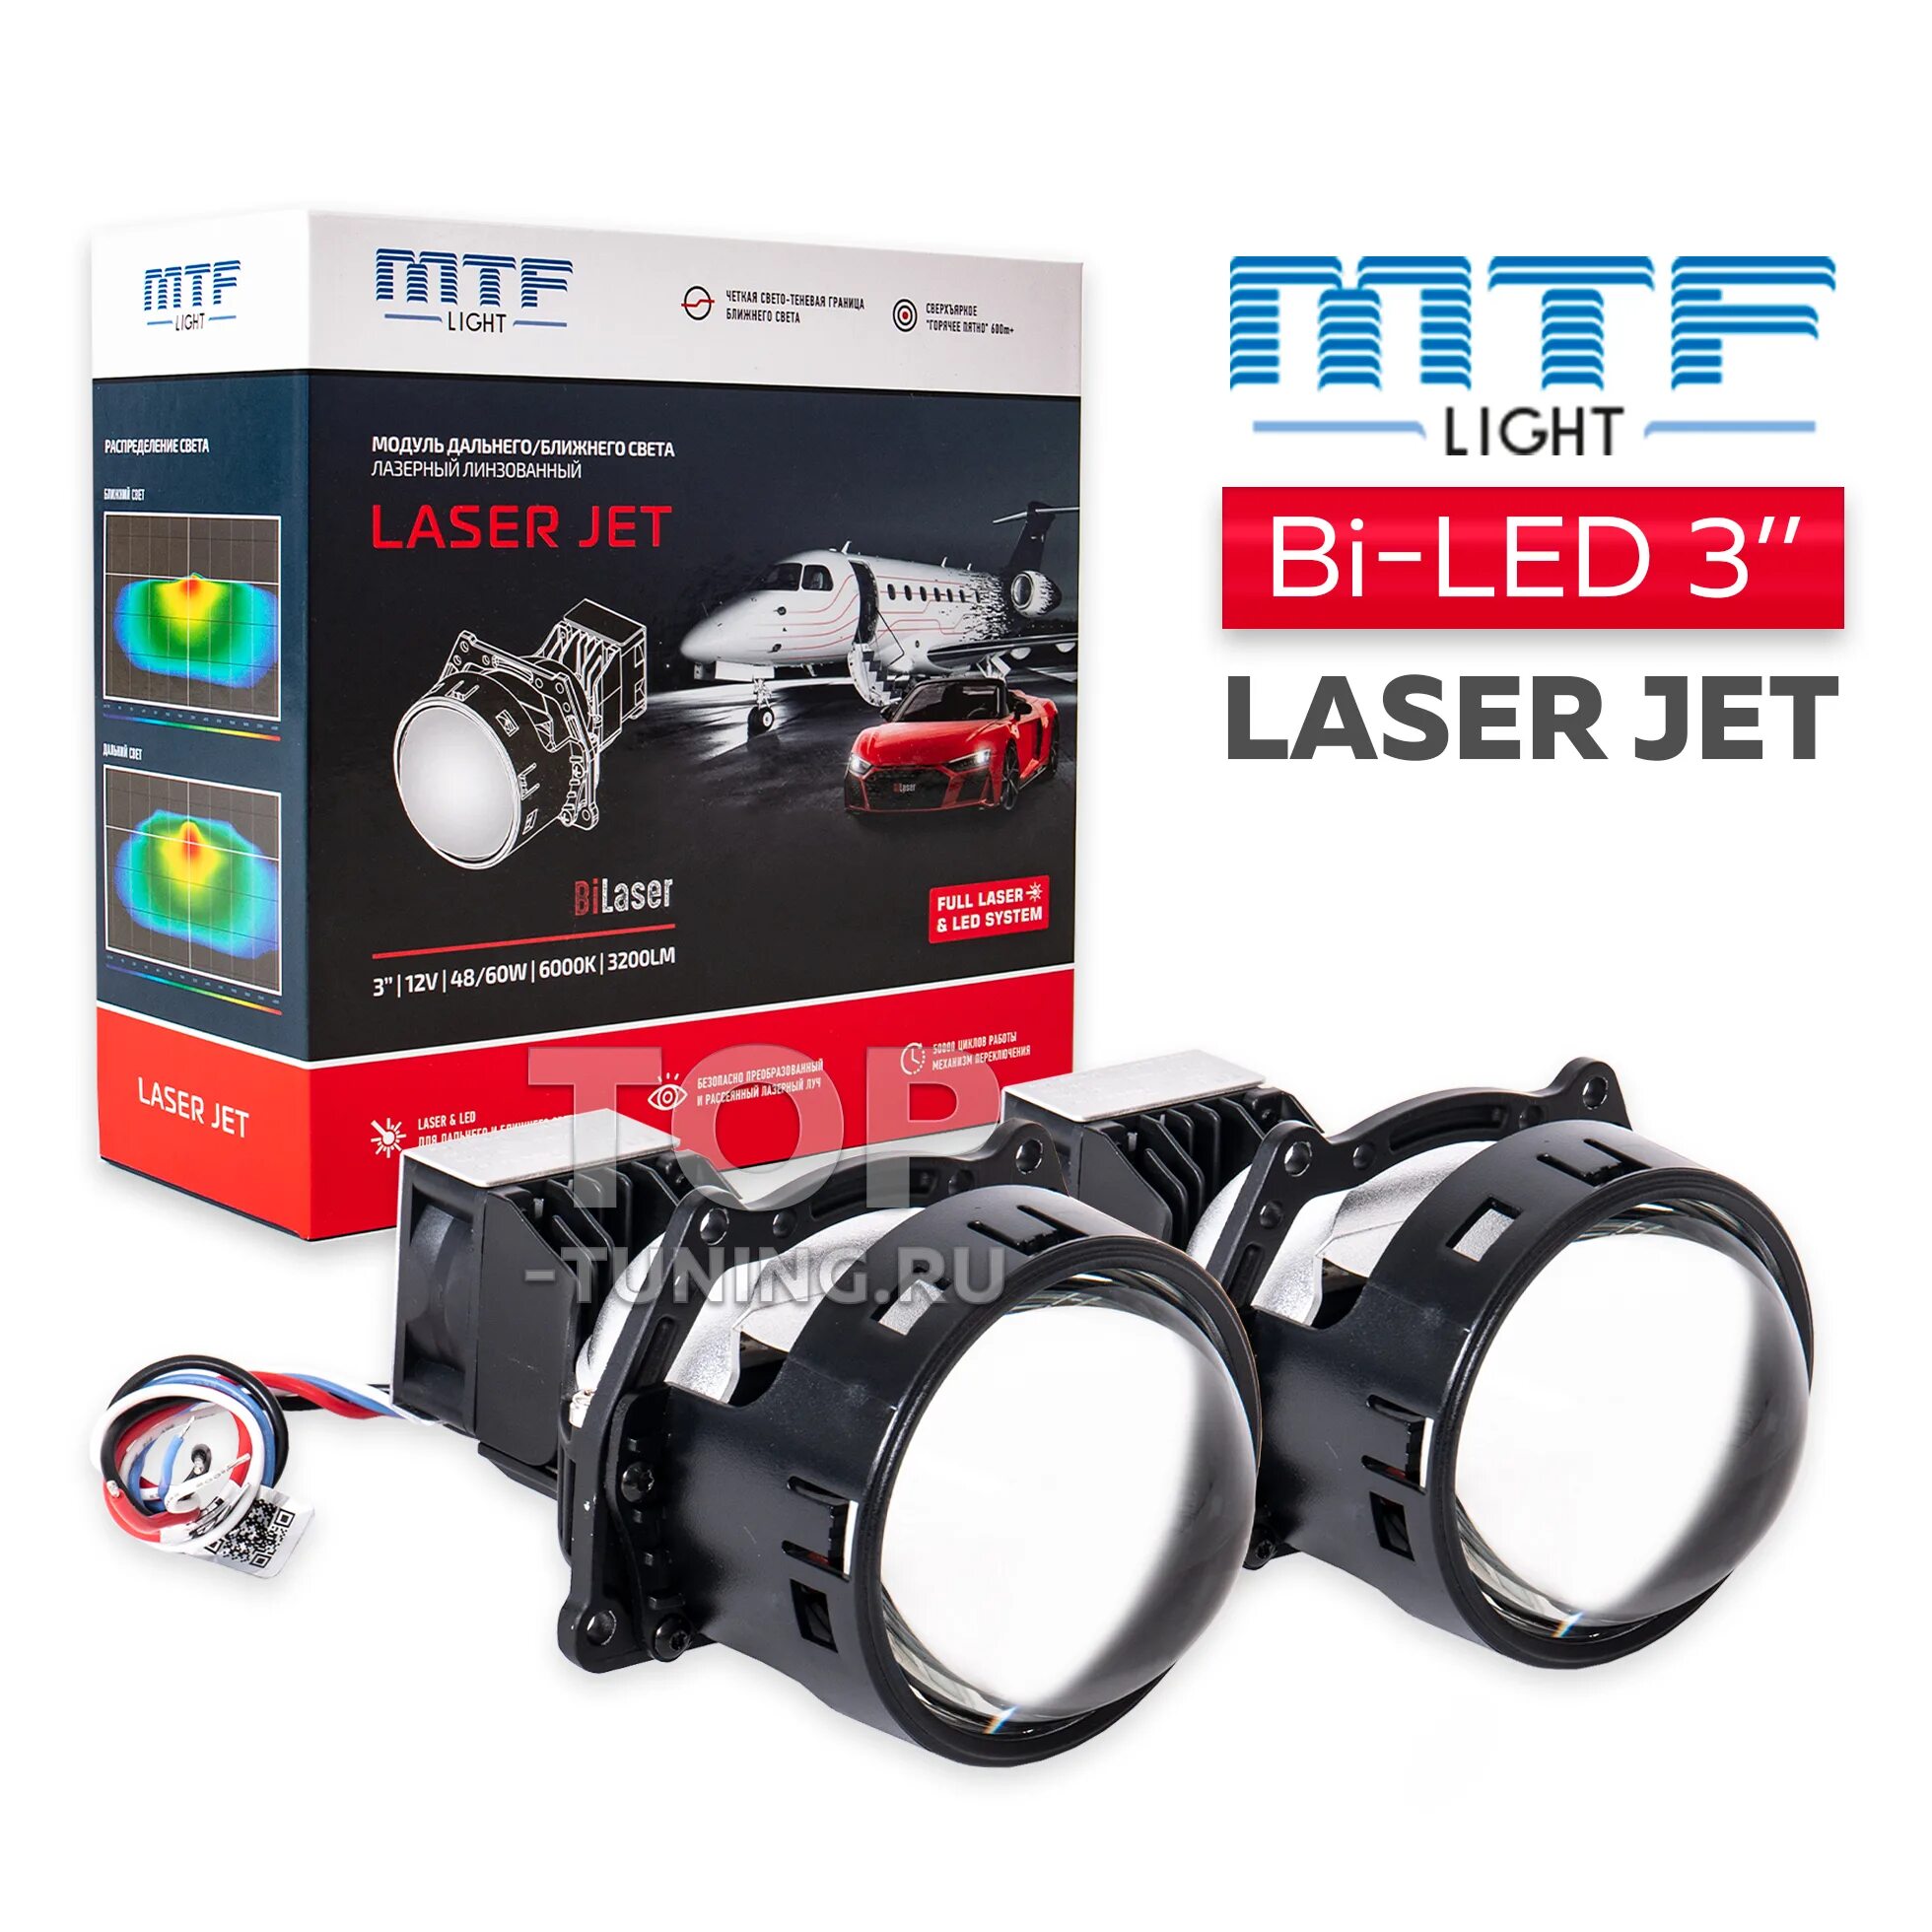 Clearlight 3.0 bi-led. MTF Light Laser Jet bi-led 3.0 6000k линзы. Линзы МТФ би лед. Би лед лазер